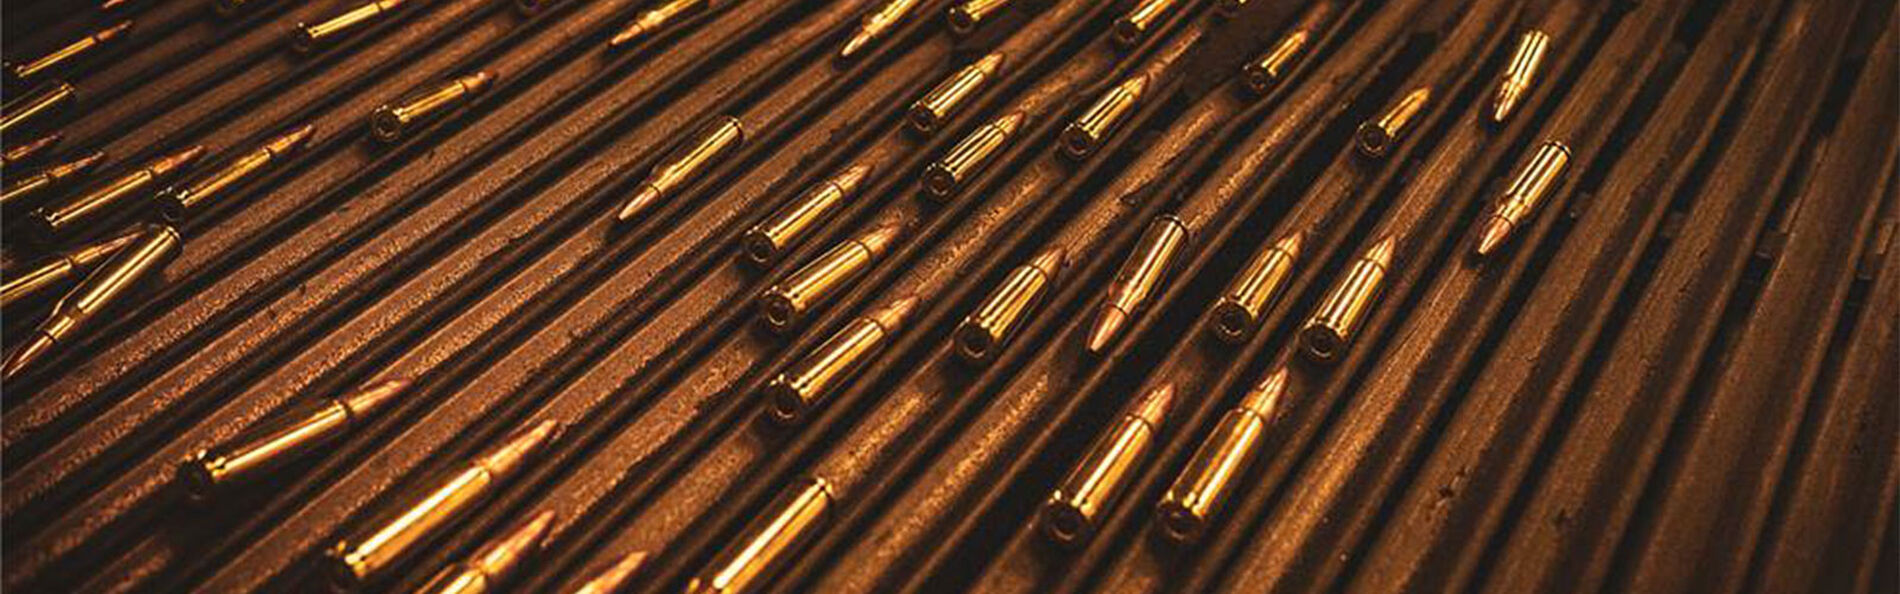 ammo cartridges moving down a convarer belt